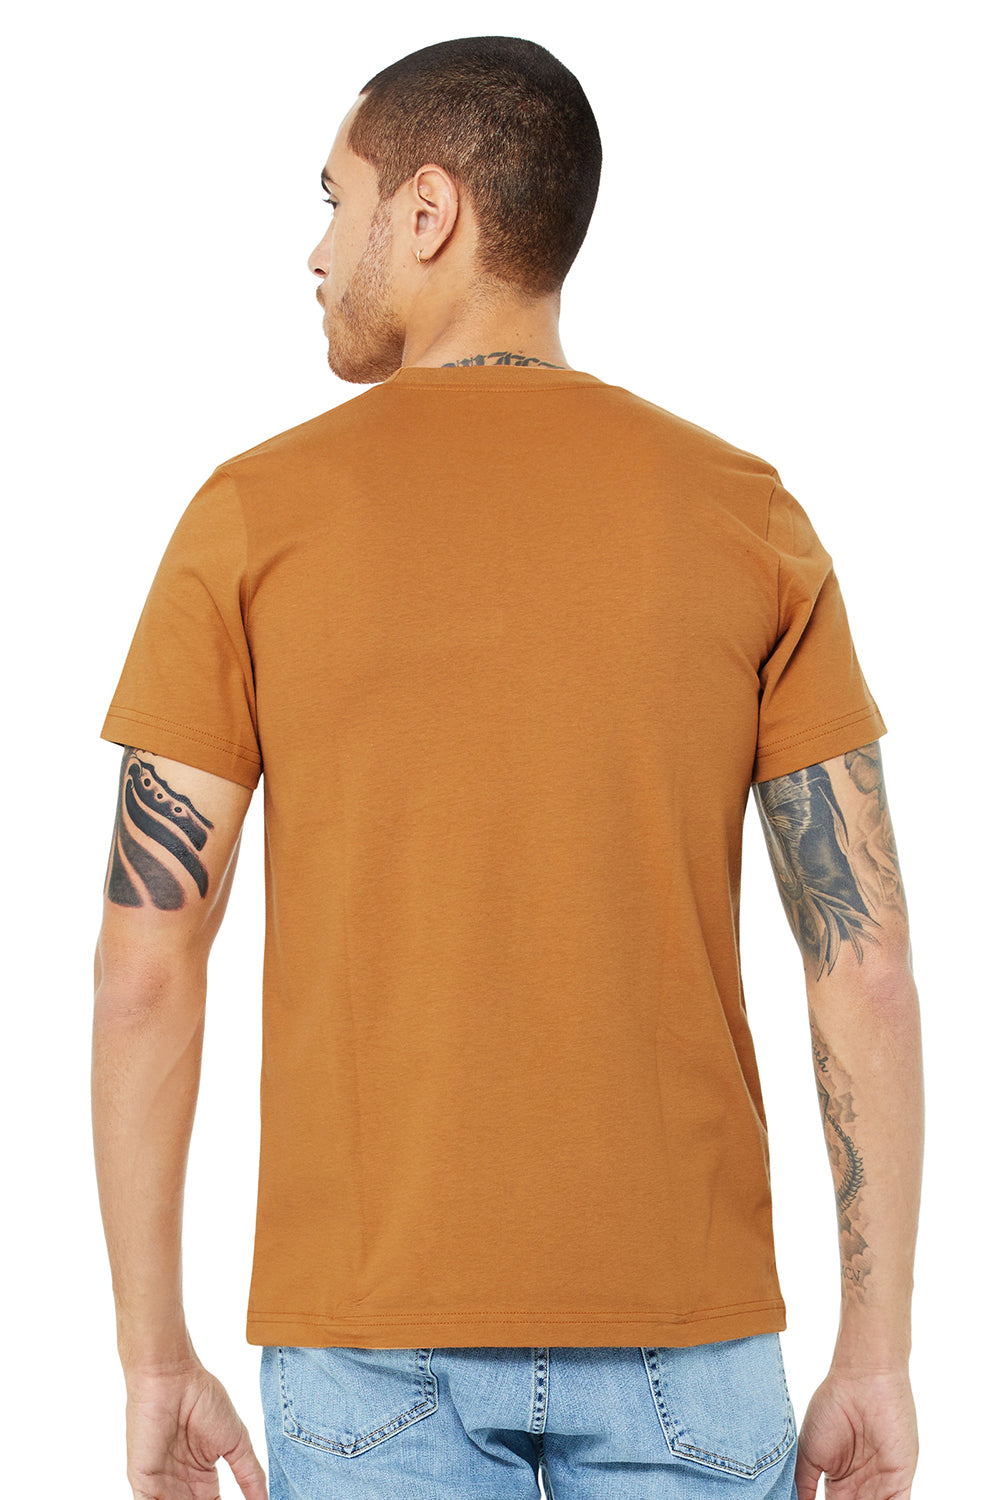 Bella + Canvas BC3001/3001C Mens Jersey Short Sleeve Crewneck T-Shirt Toast Model Back